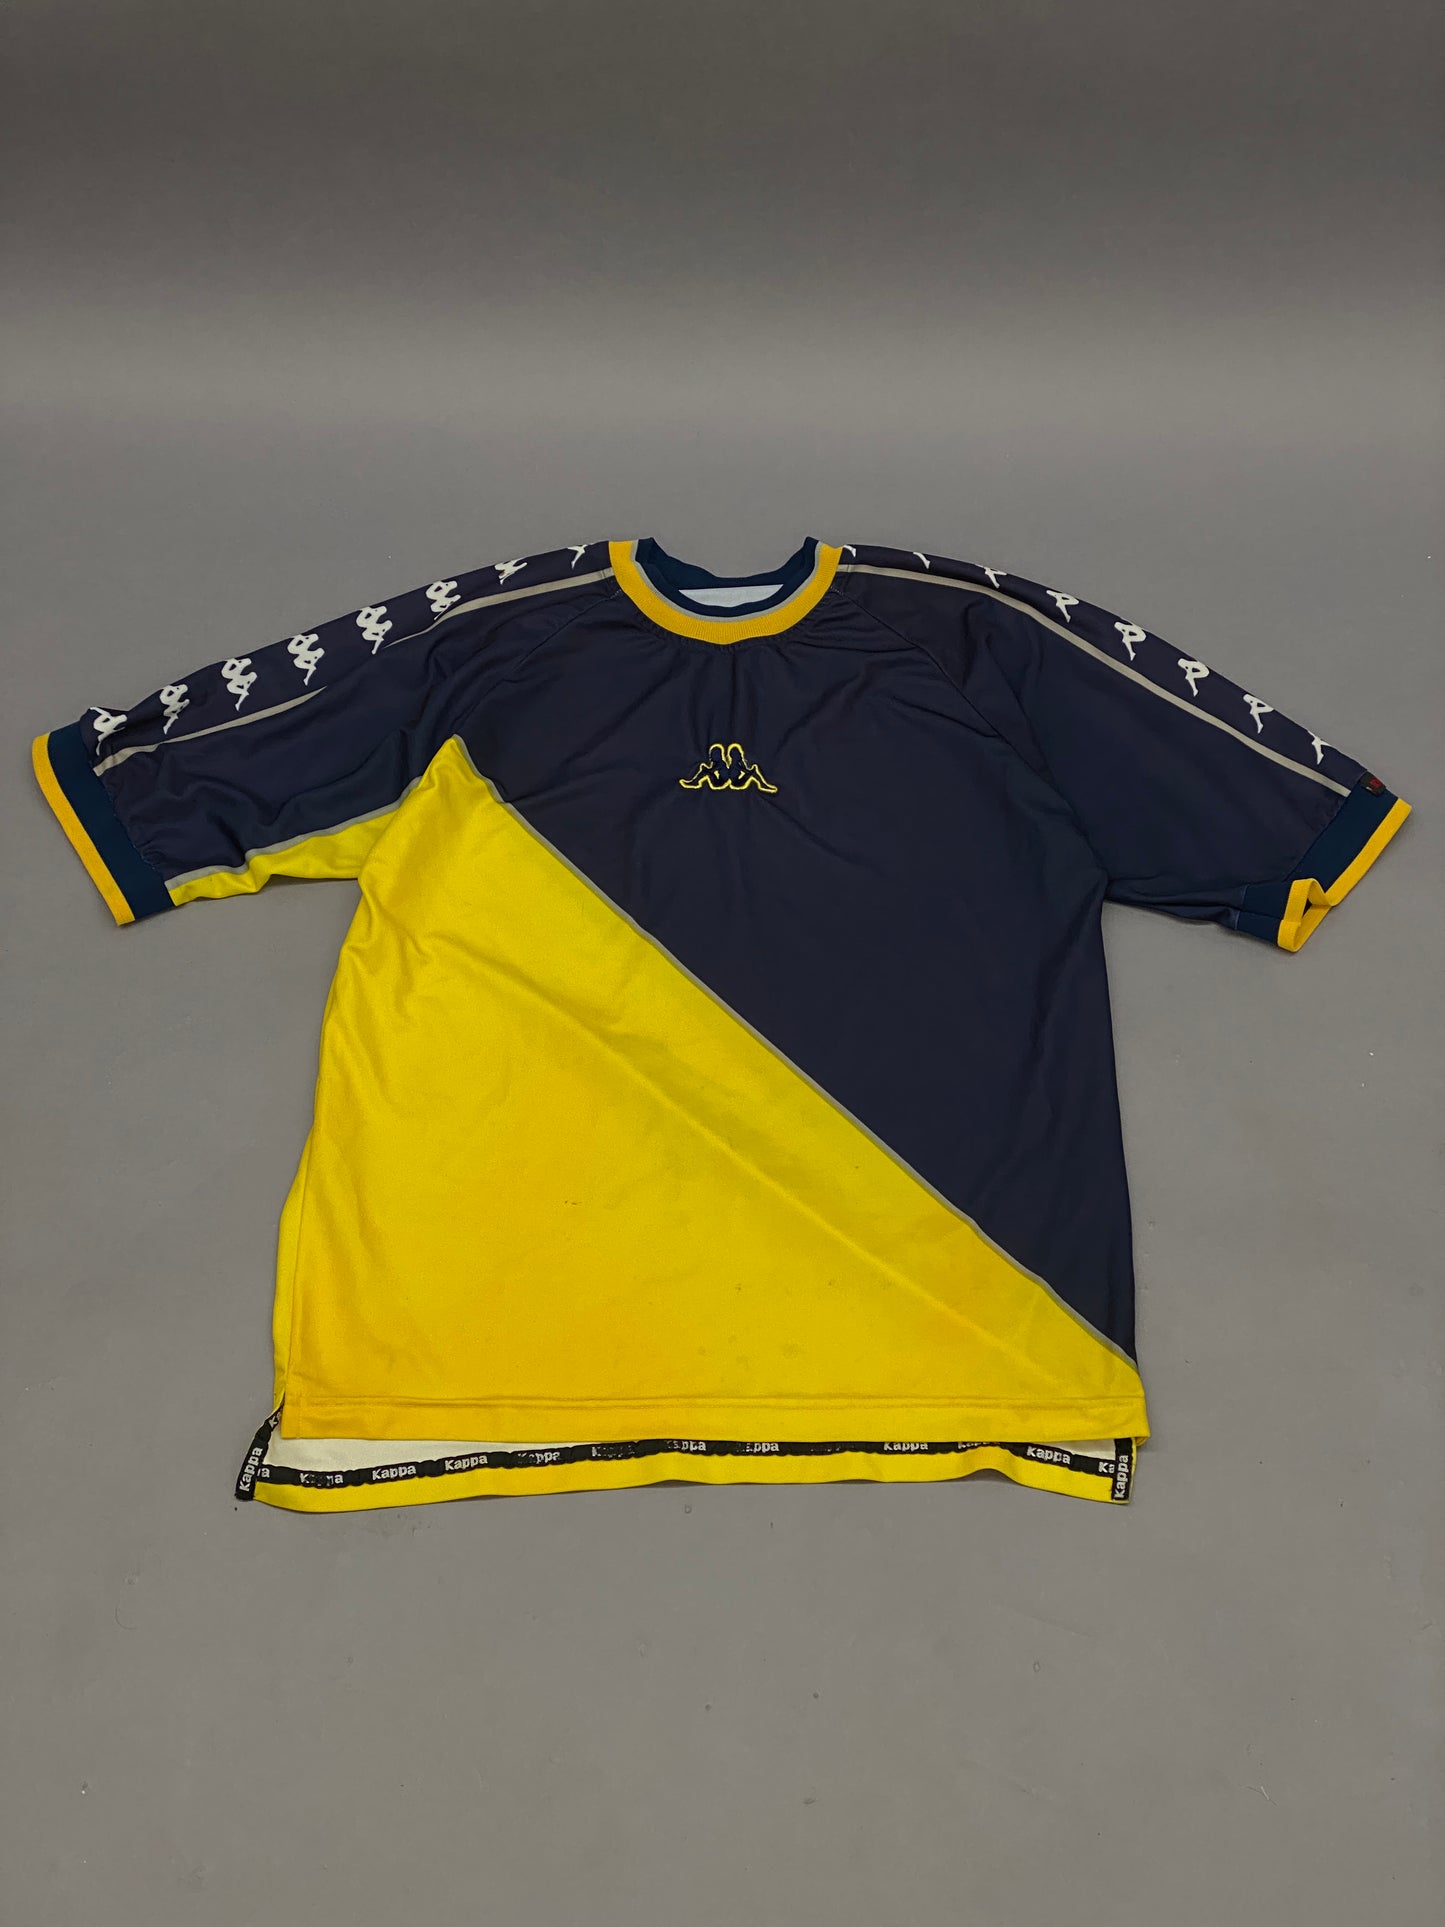 Kappa Monaco 2000 Vintage Jersey